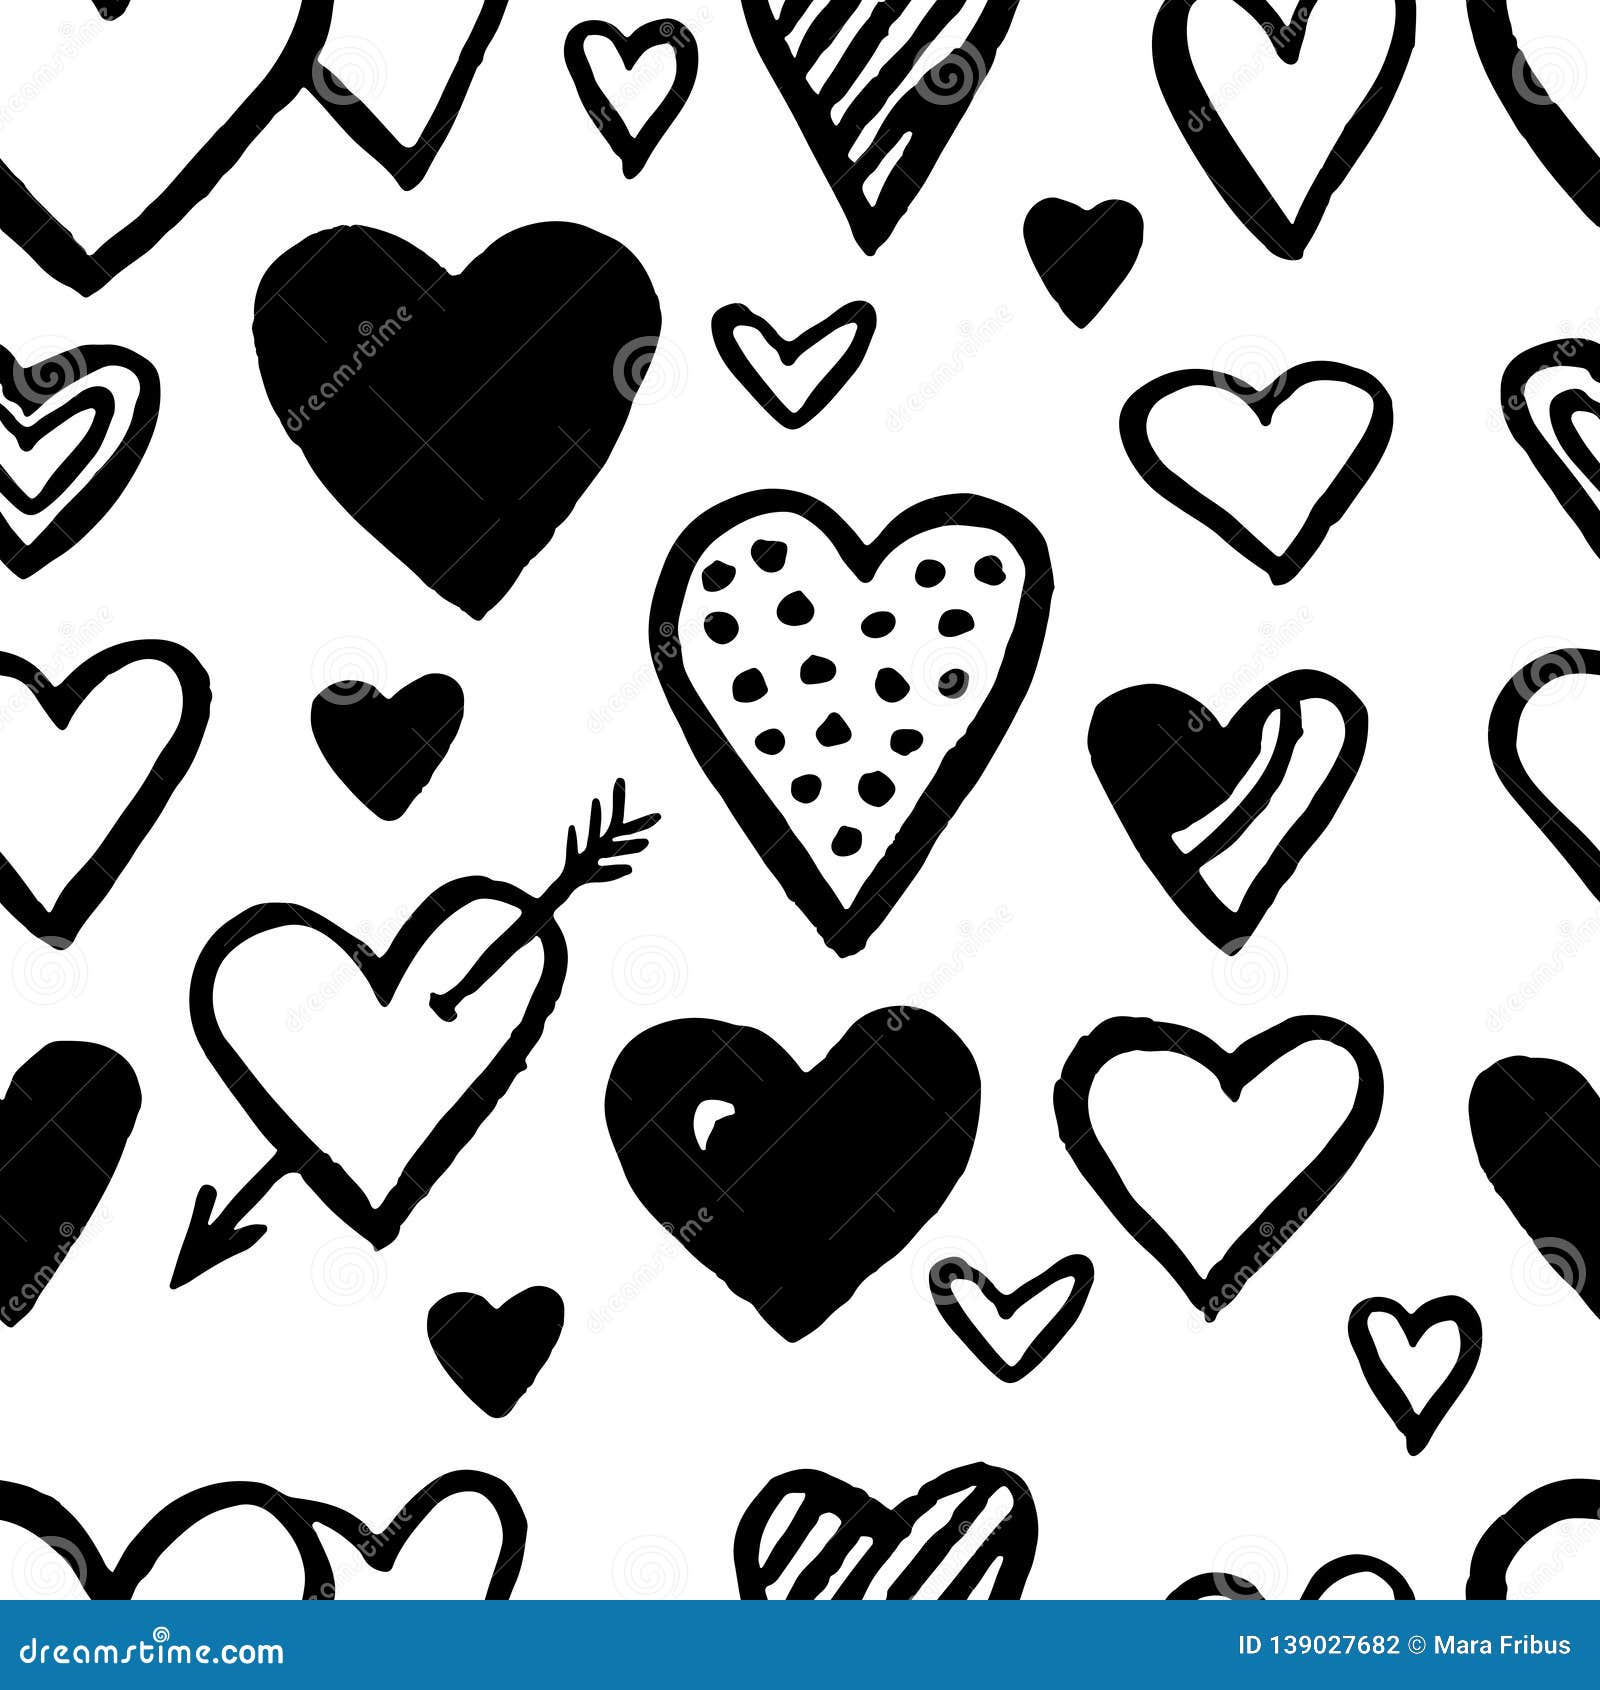 Valentine hearts pattern stock vector. Illustration of wedding - 139027682